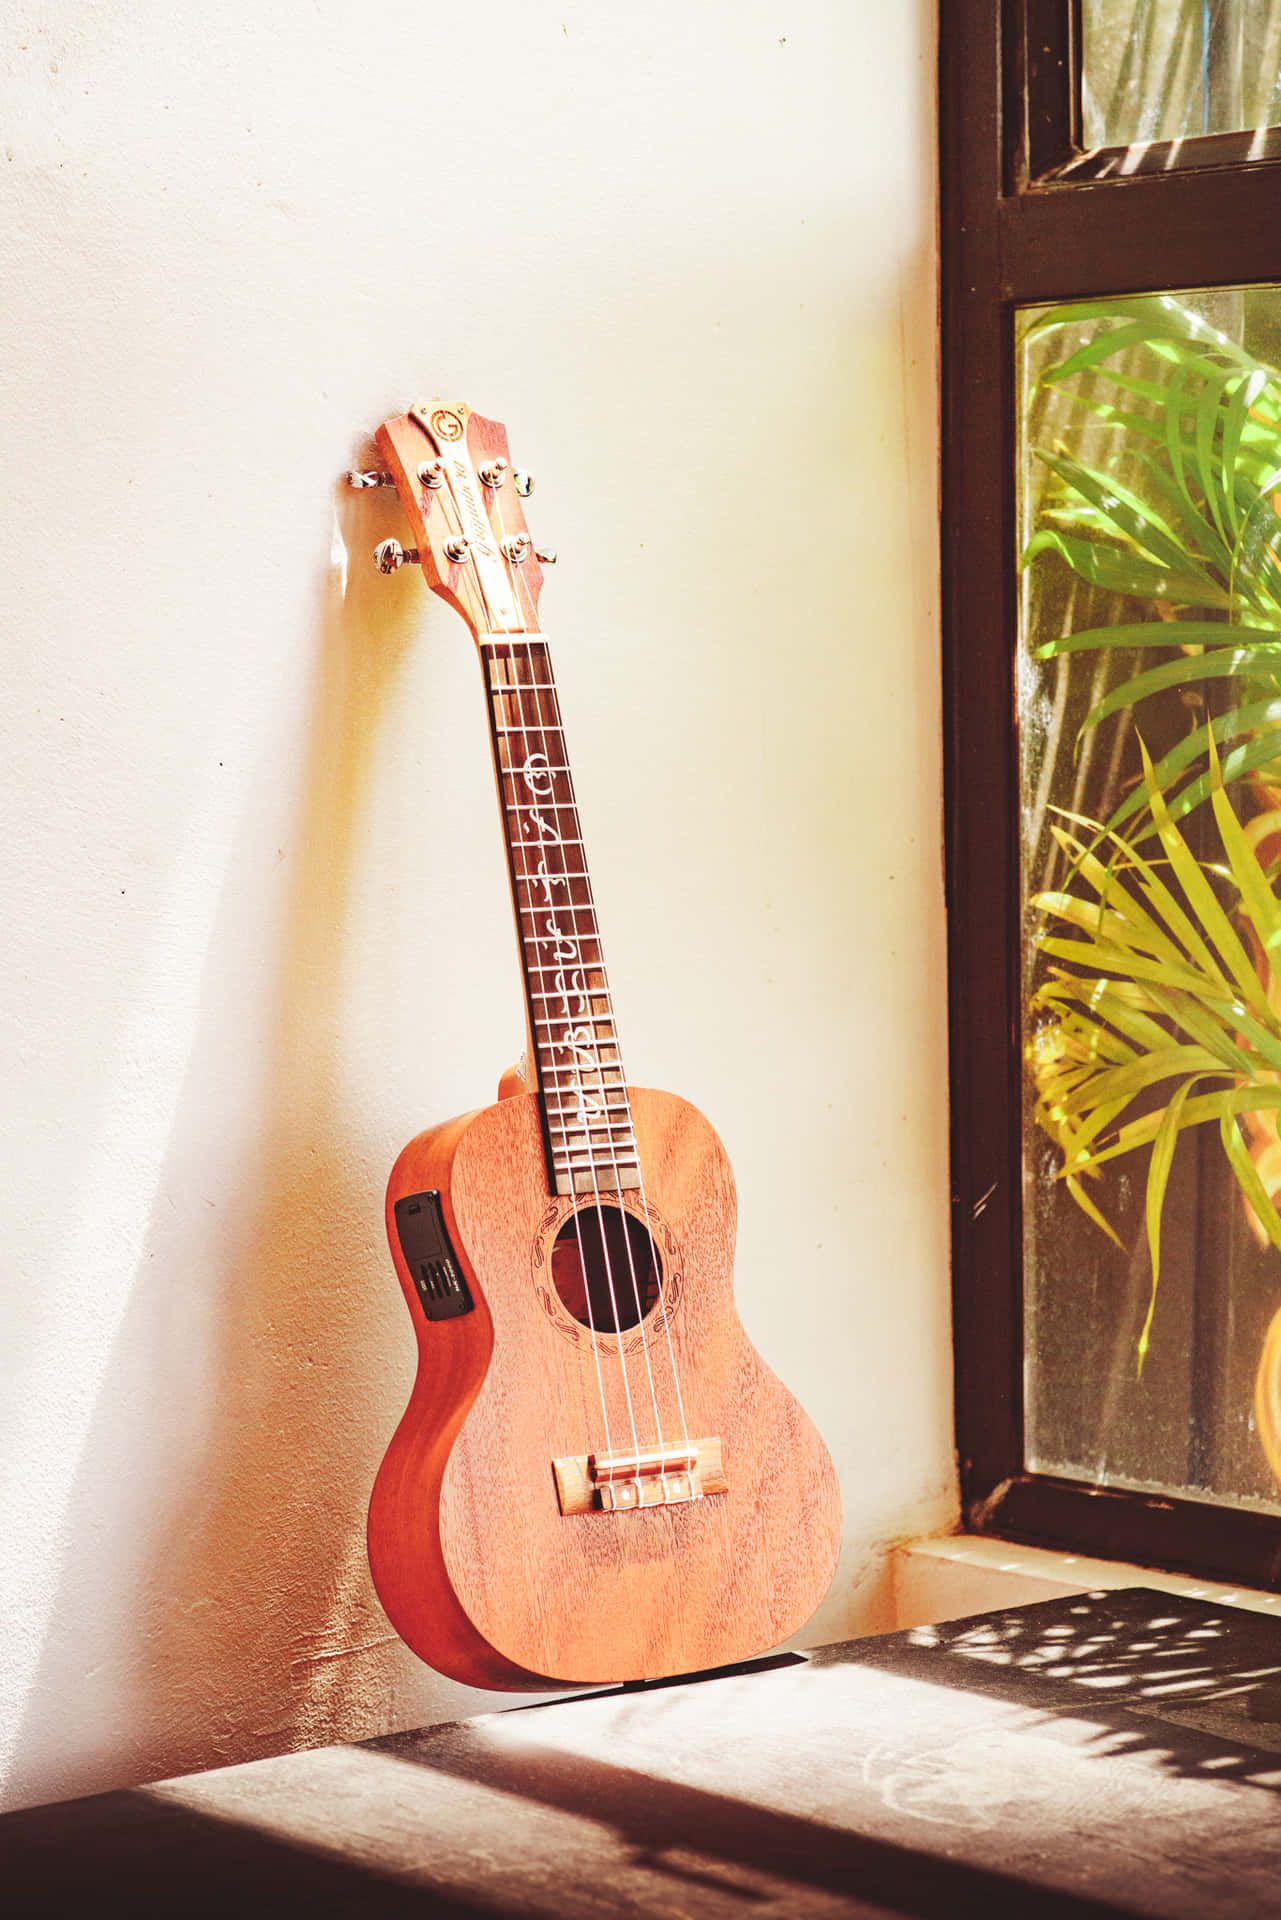 A ukulele sitting on the window sill - Guitar